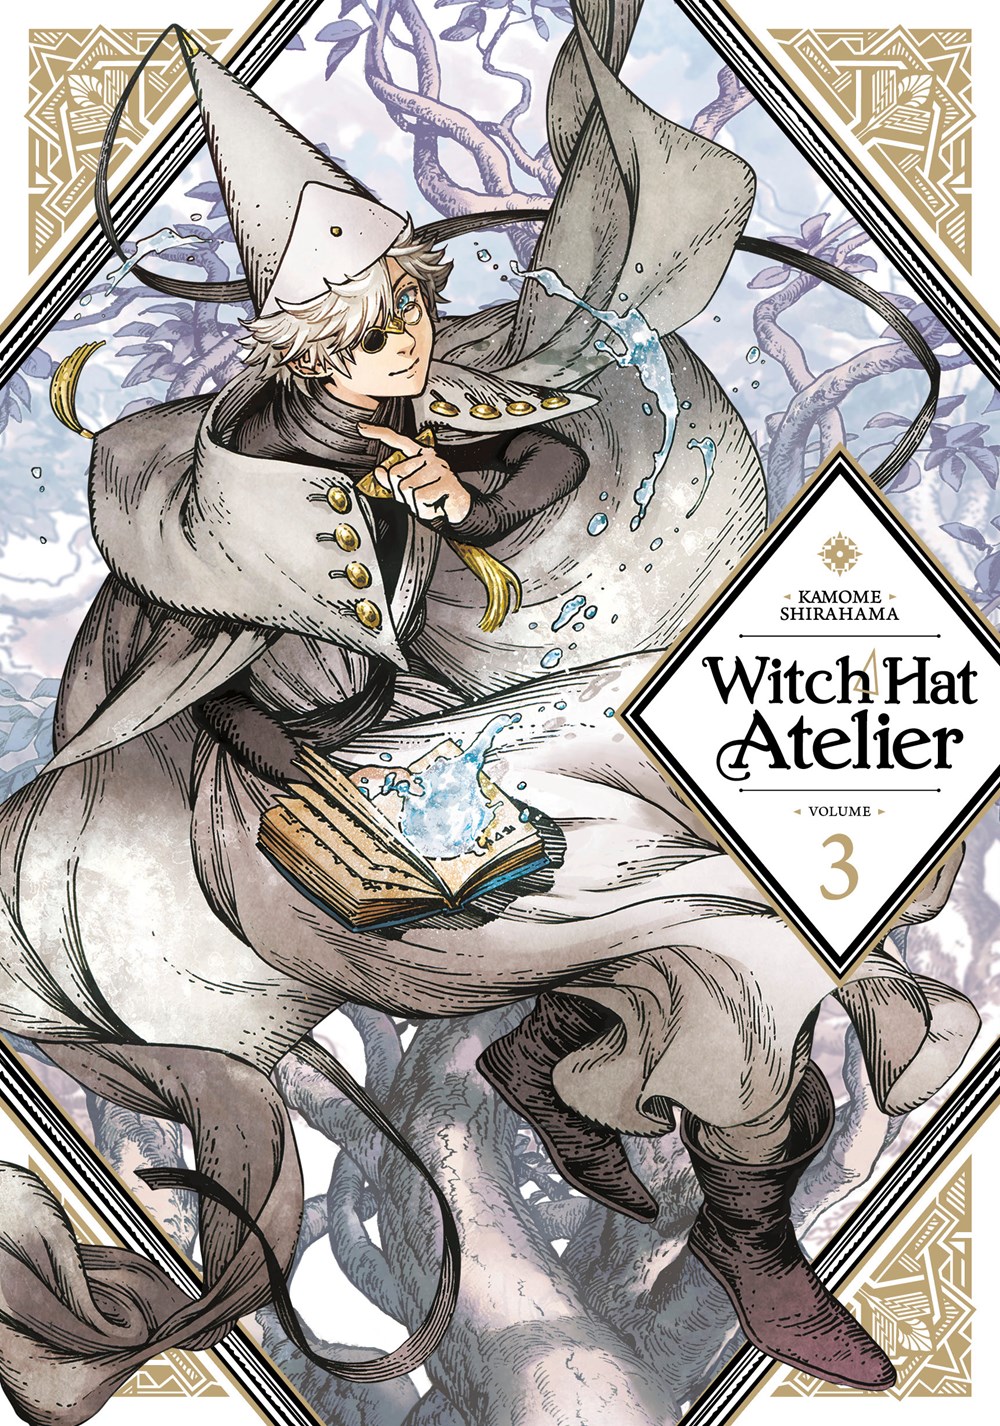 Witch Hat Atelier Vol. 3 by Kamome Shirahama {Manga Review}hryabookblog